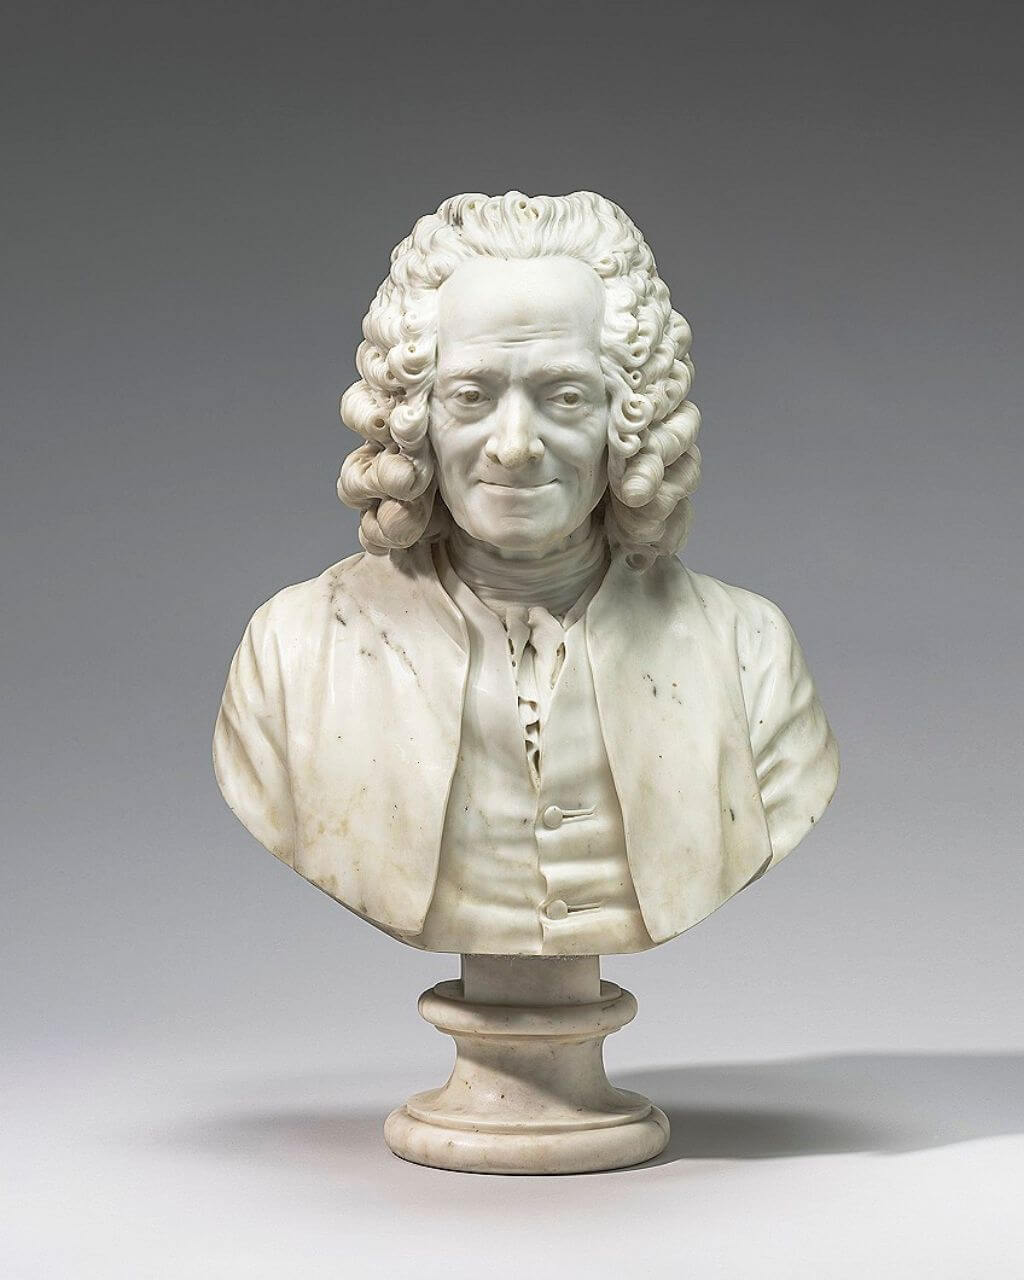 Voltaire 1694 – 1778